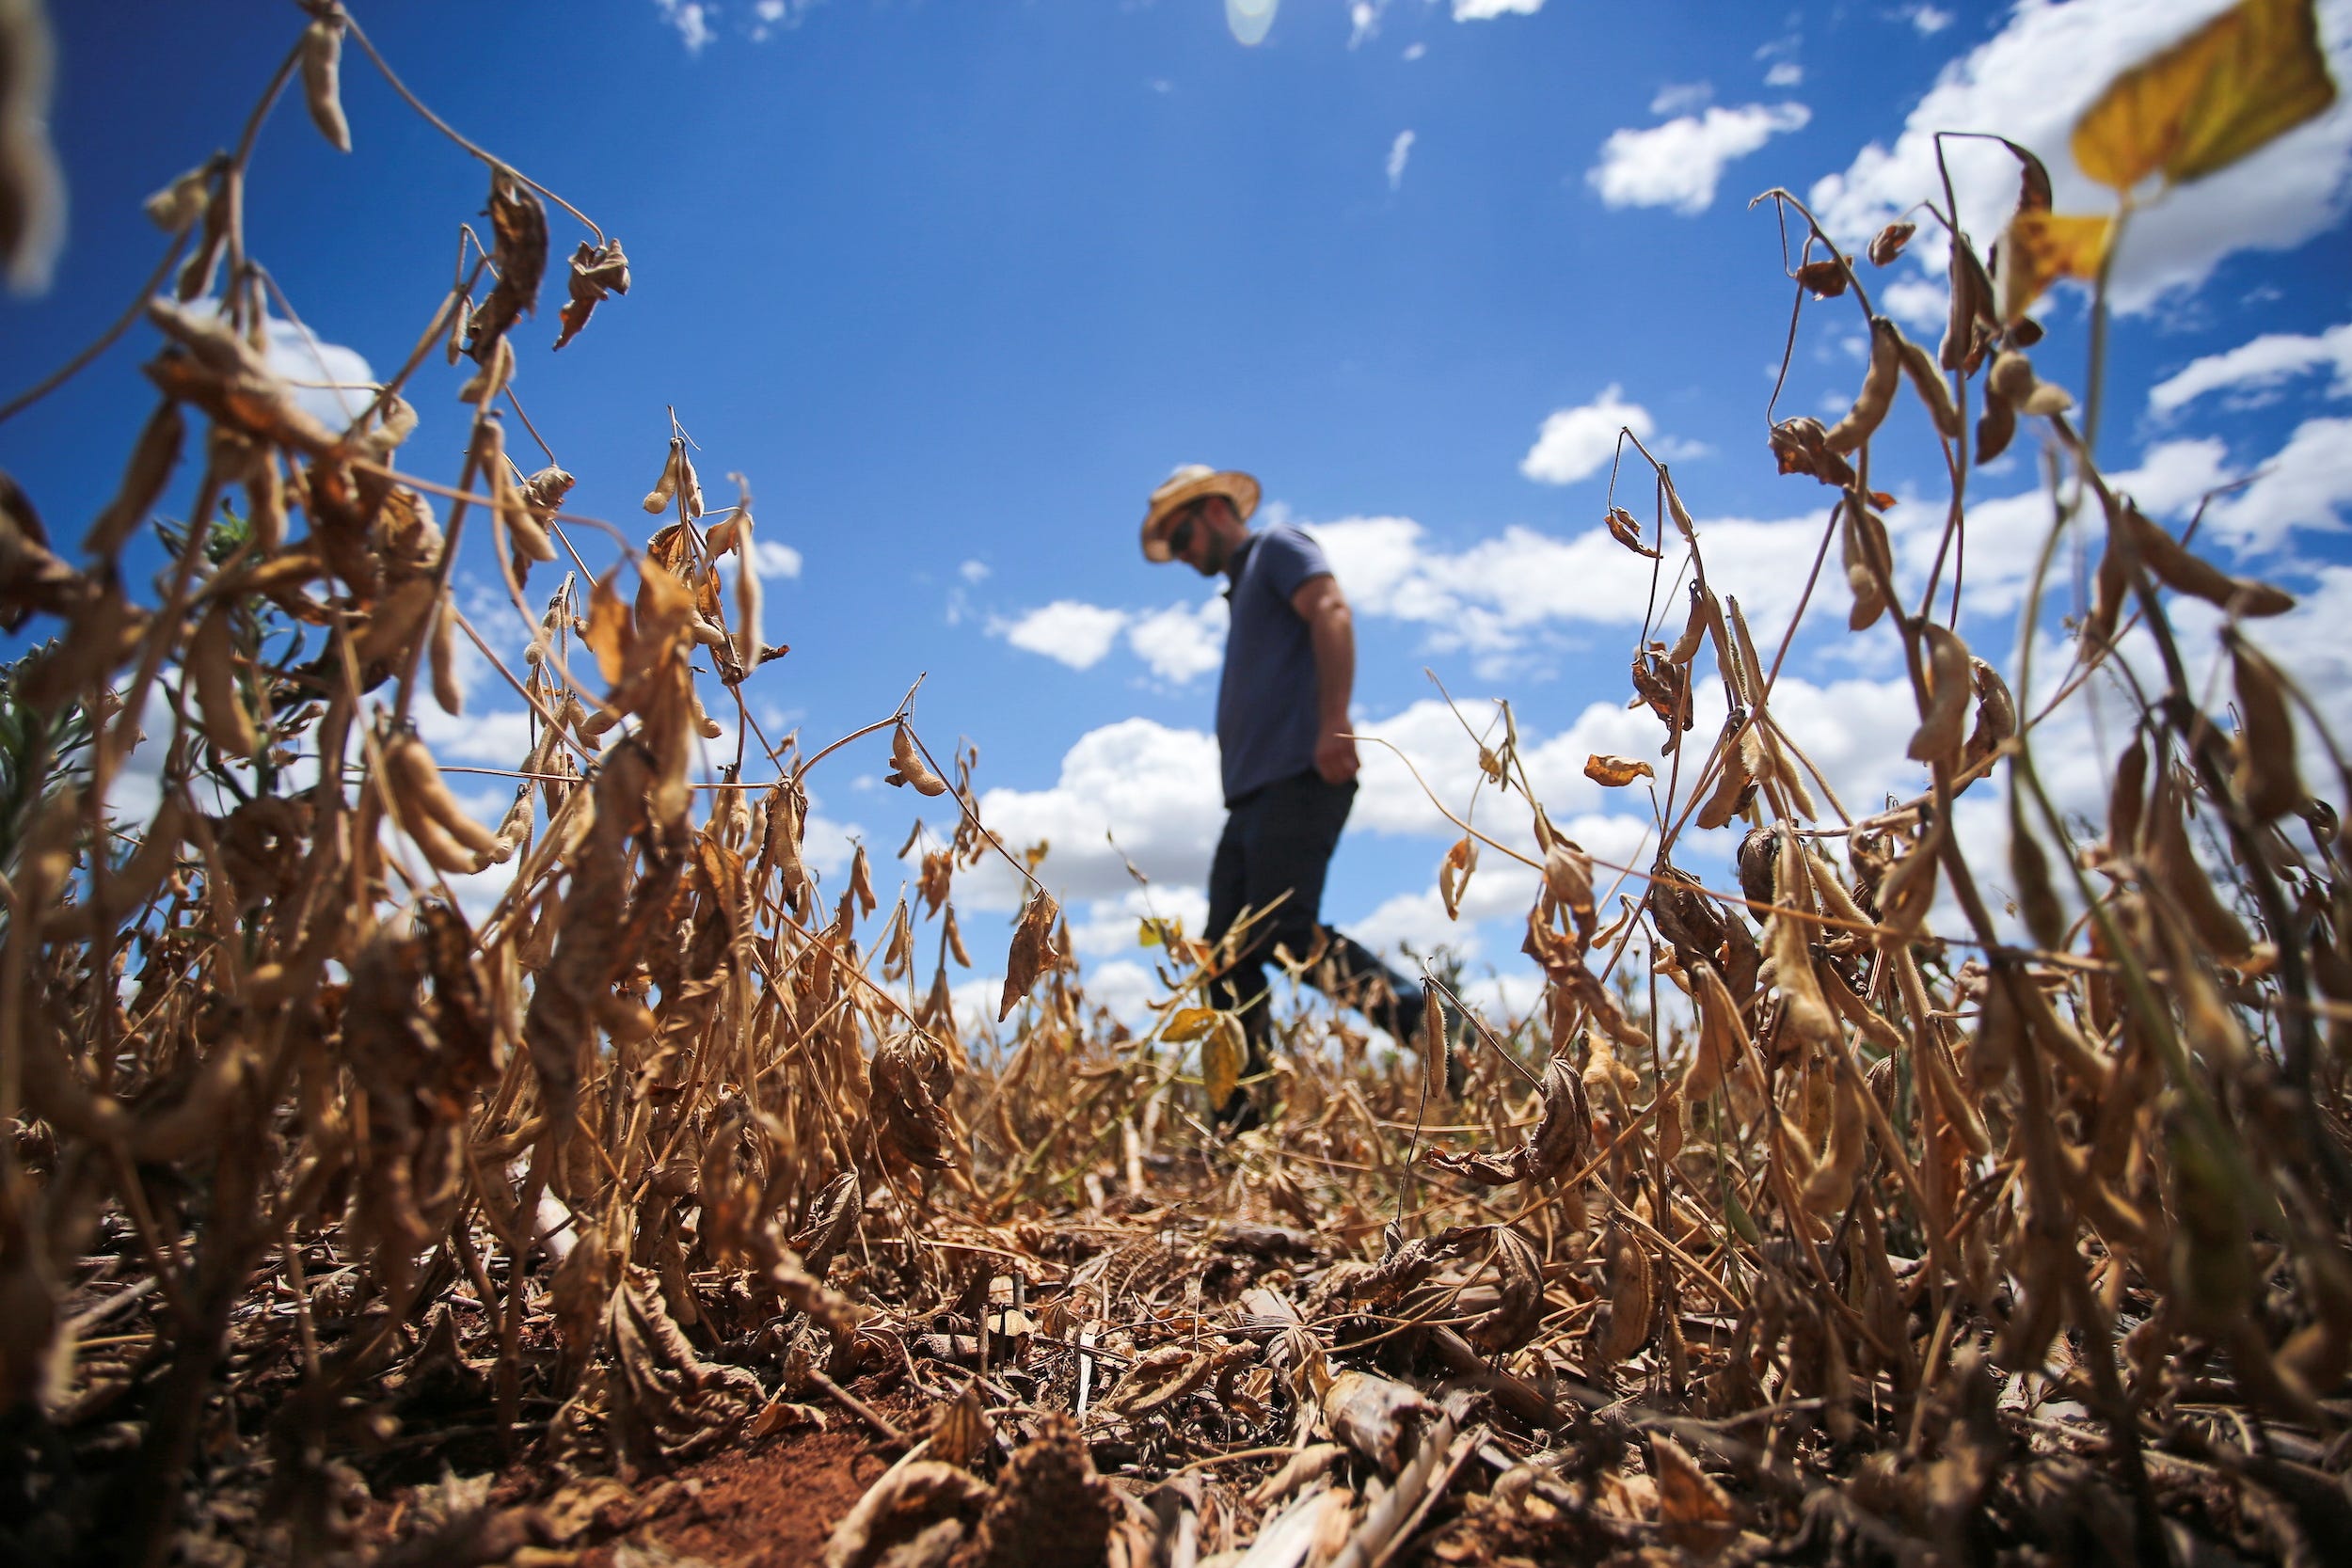 farmer walks through field of dried brown soybean plants